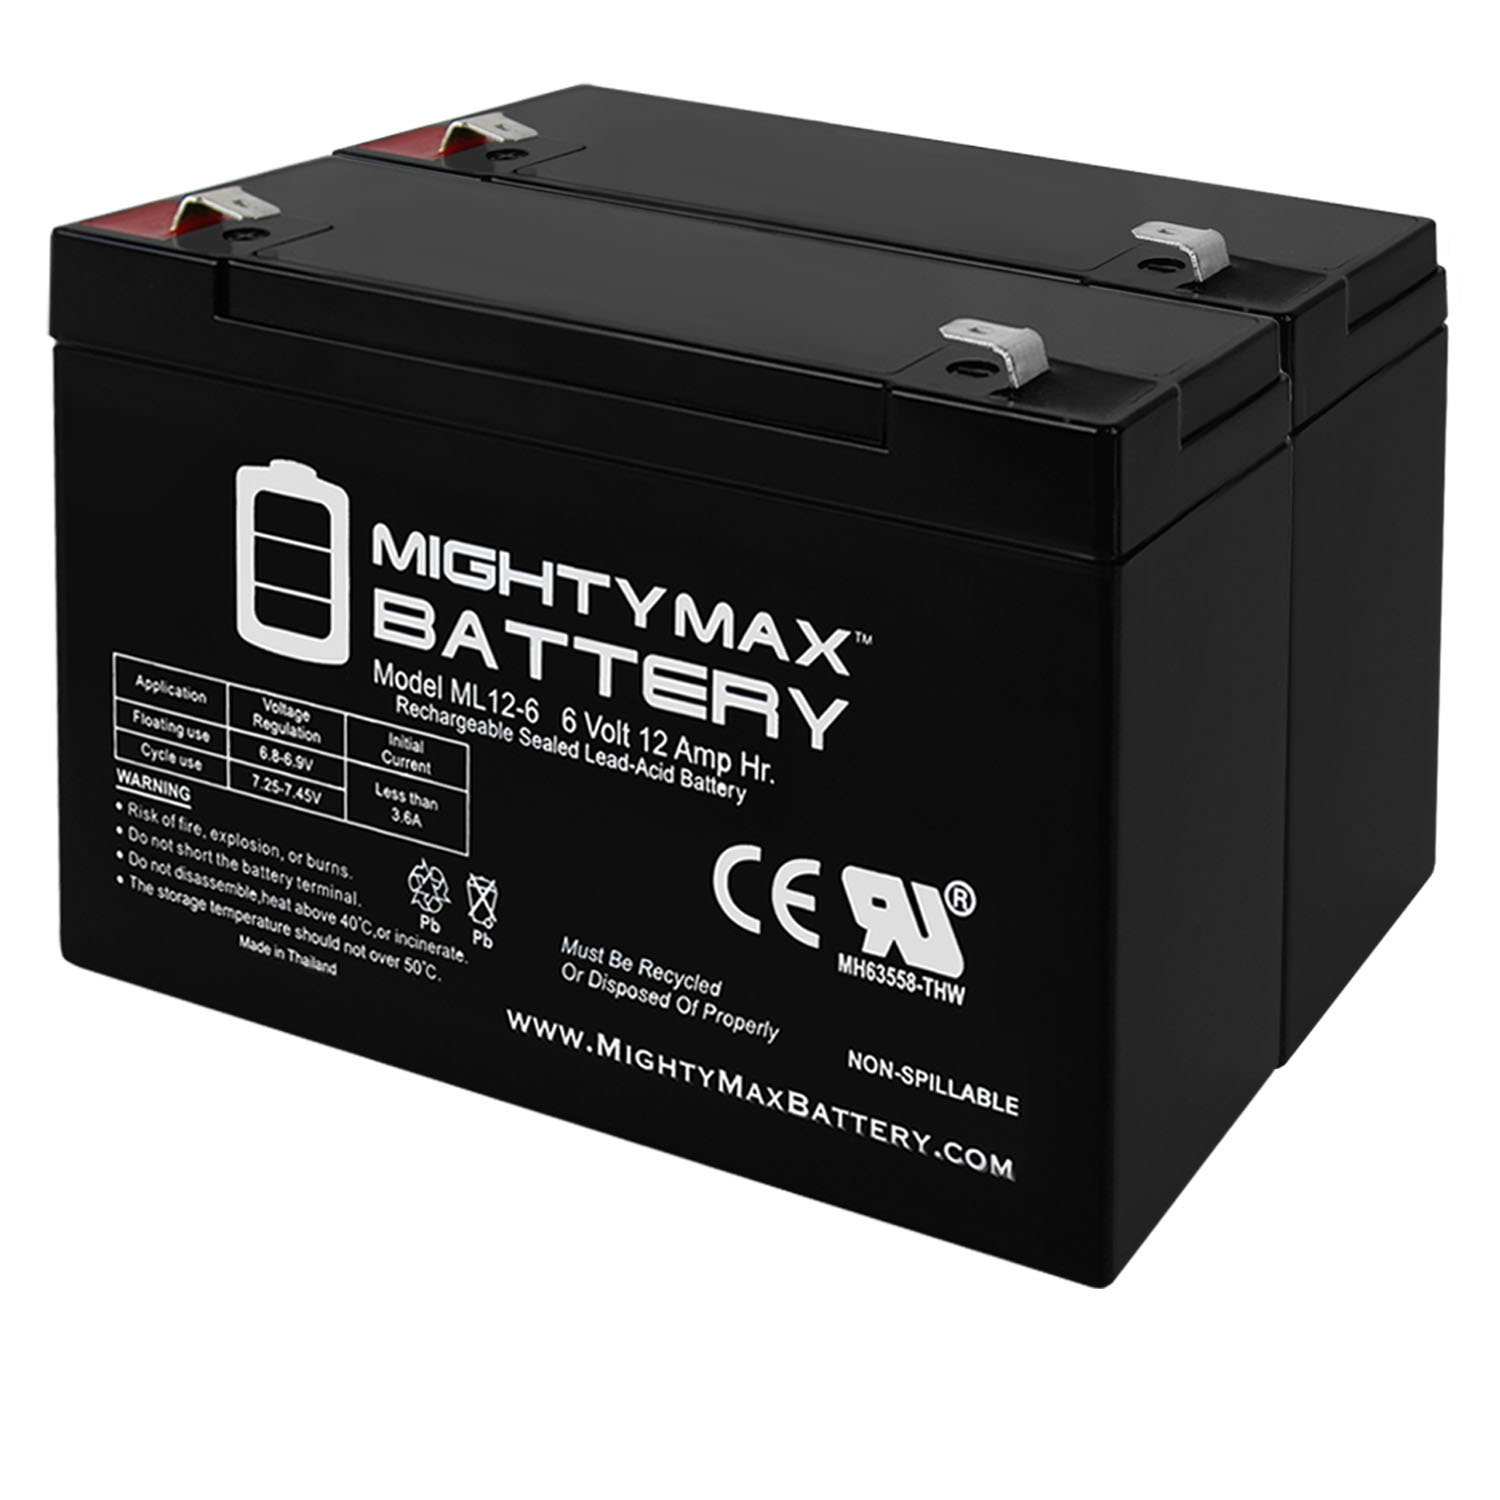 6V 12AH F2 SLA Replacement Battery for Solar Power Banks - 2 Pack